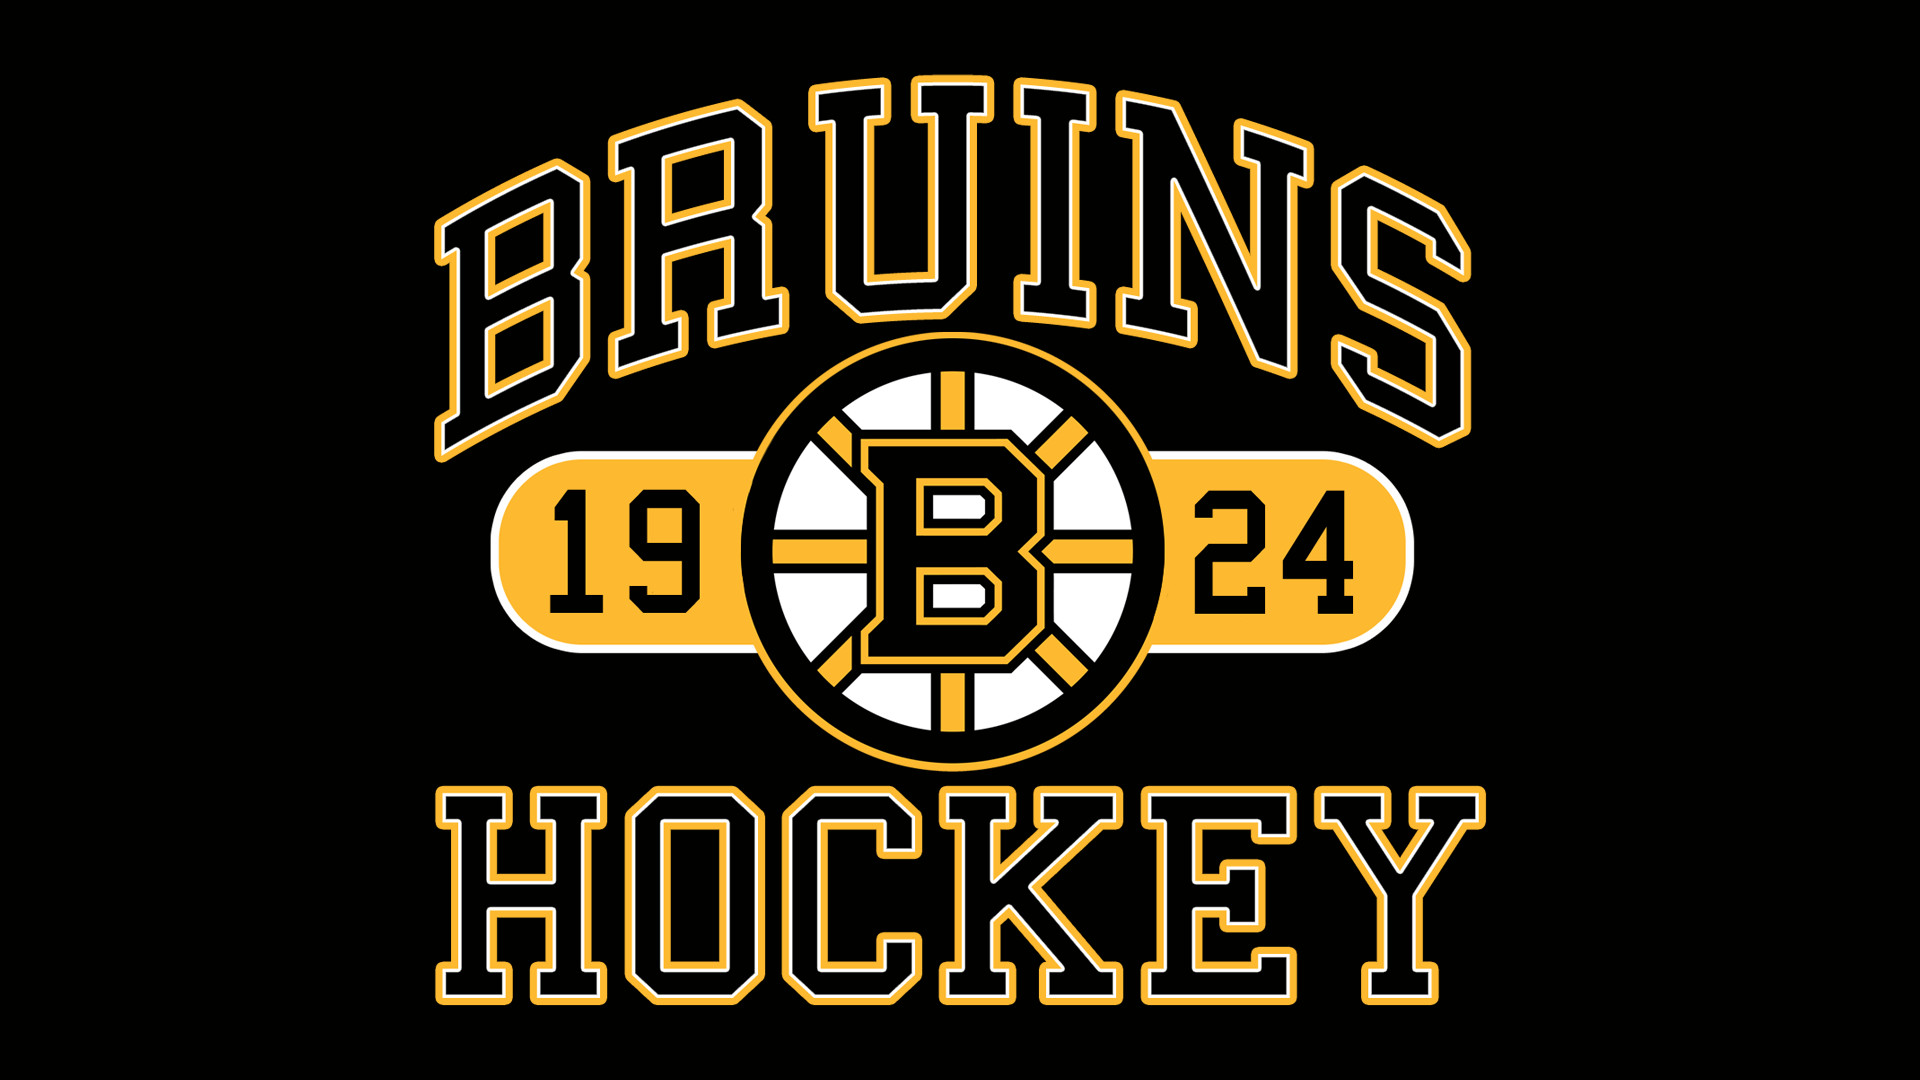 1920x1080 Bruins Hockey by Bruins4Life Bruins Hockey by Bruins4Life